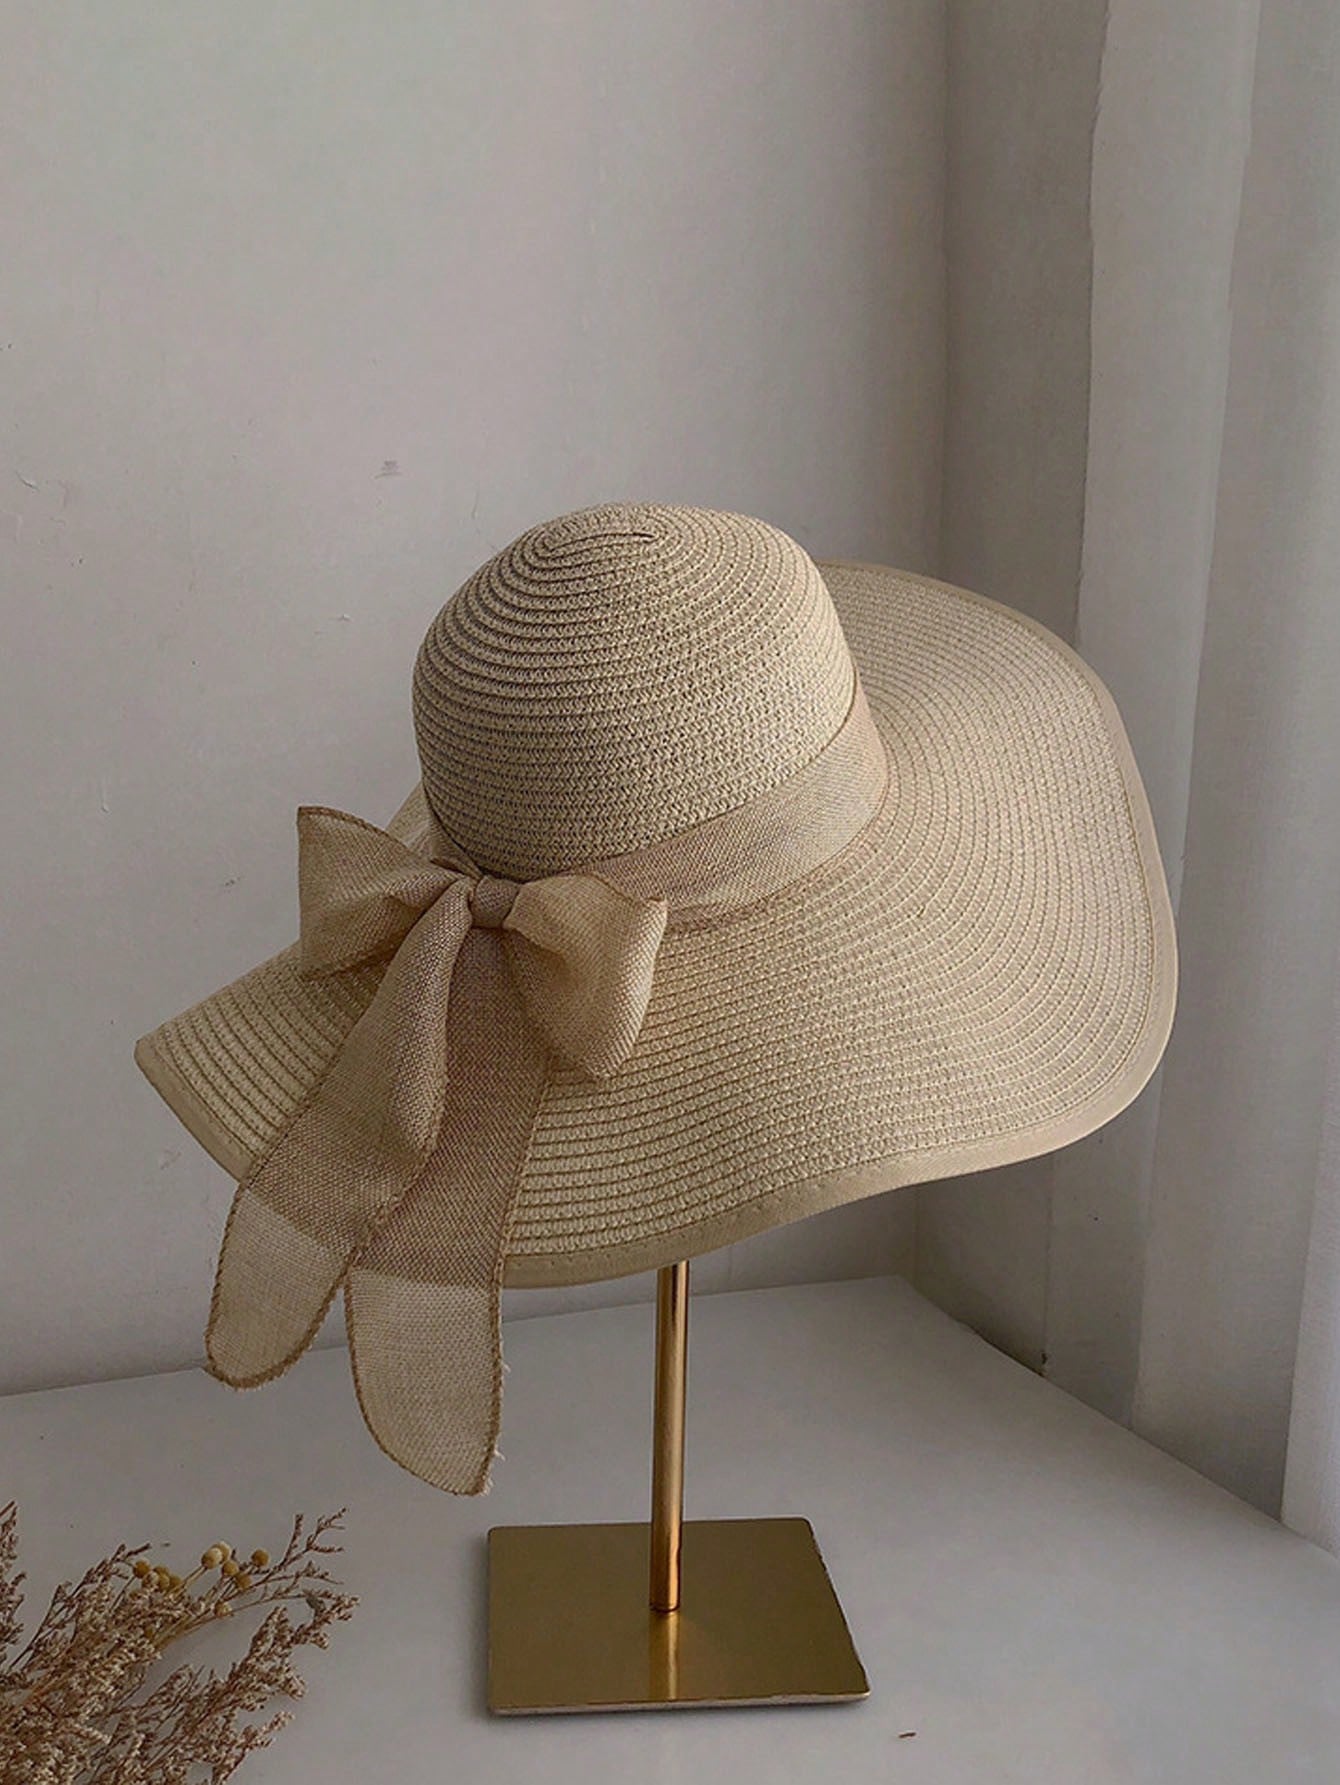 Stylish Summer Beach Straw Hat